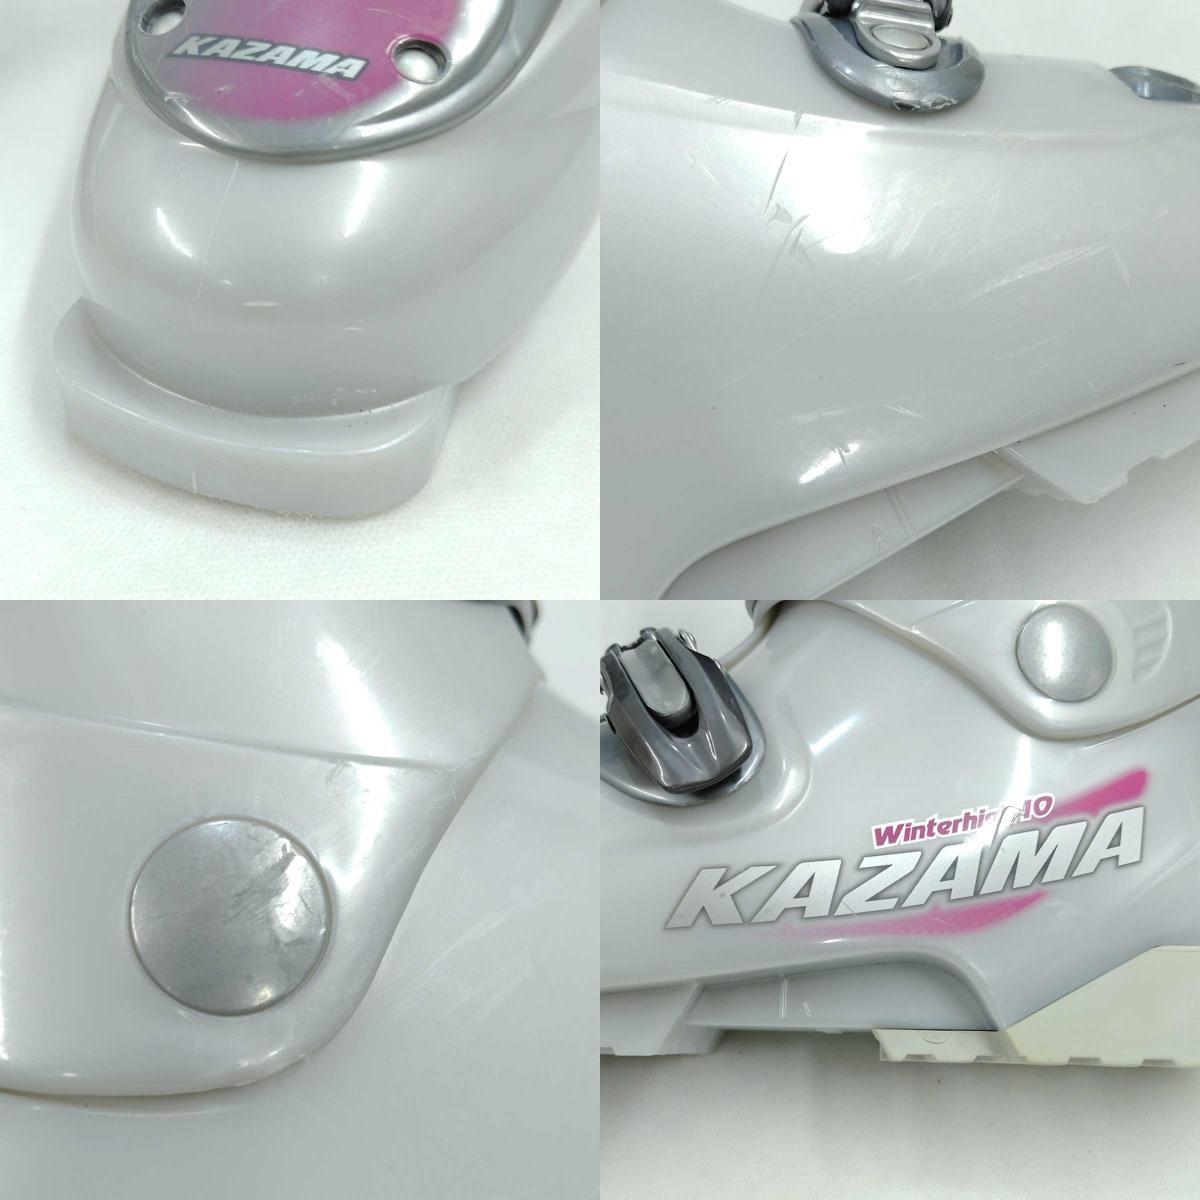 [ б/у ] Kazama WINTERHIGH 10 лыжи ботинки 23-23.5cm Kids kazama Junior 